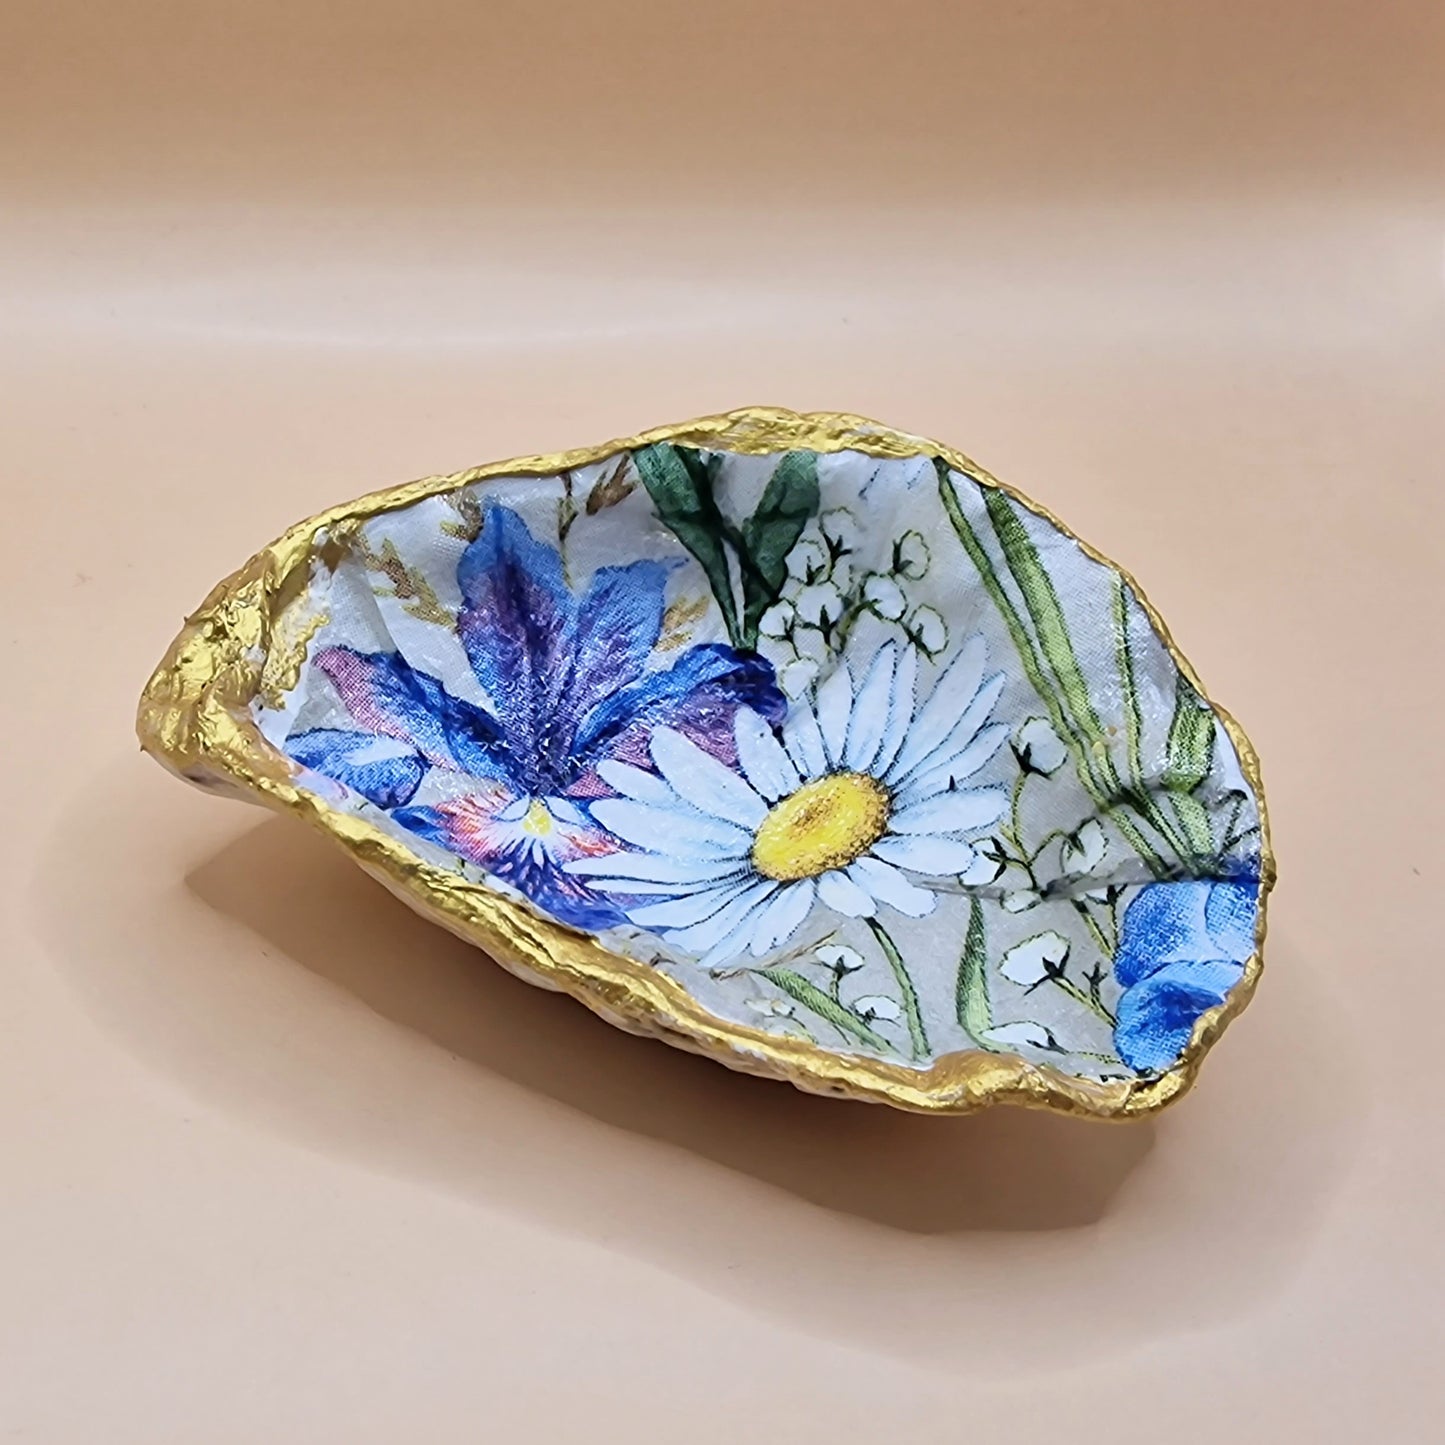 Iris Daisy Flowers Oyster Shell Trinket Dish